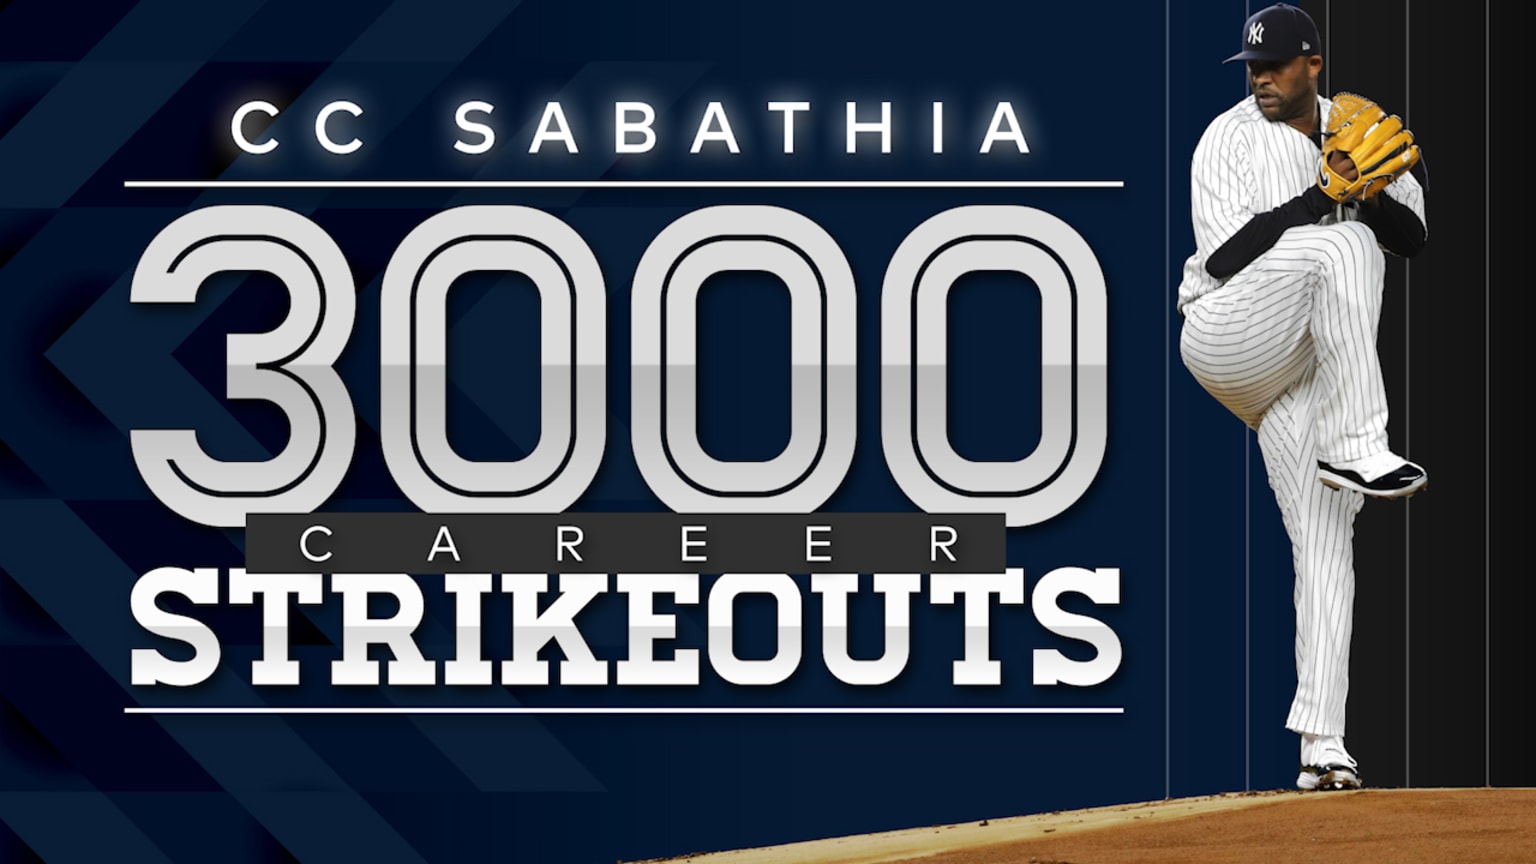 CC Sabathia: 3,000 Strikeouts, 05/01/2019